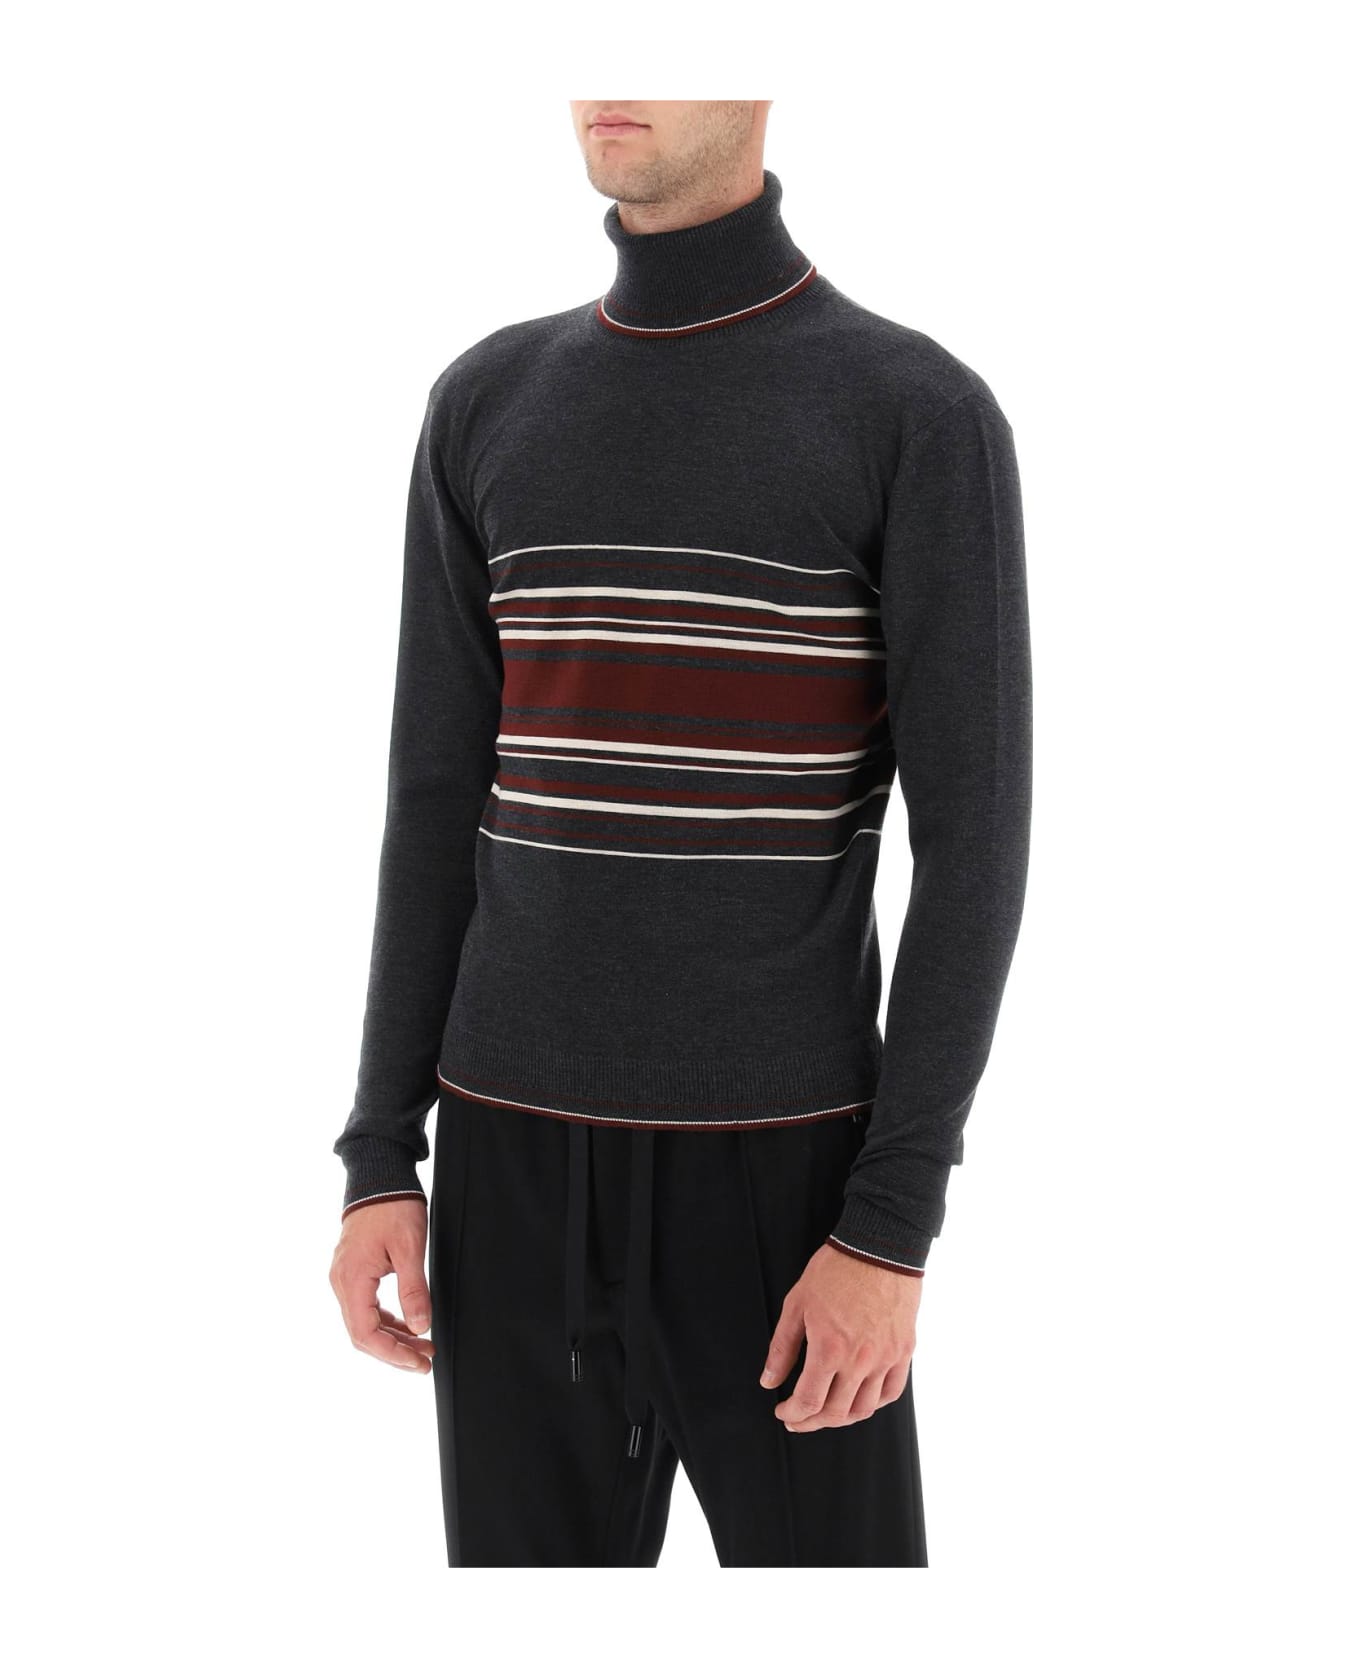 Dolce & Gabbana Striped Turtleneck Sweater - Variante Abbinata